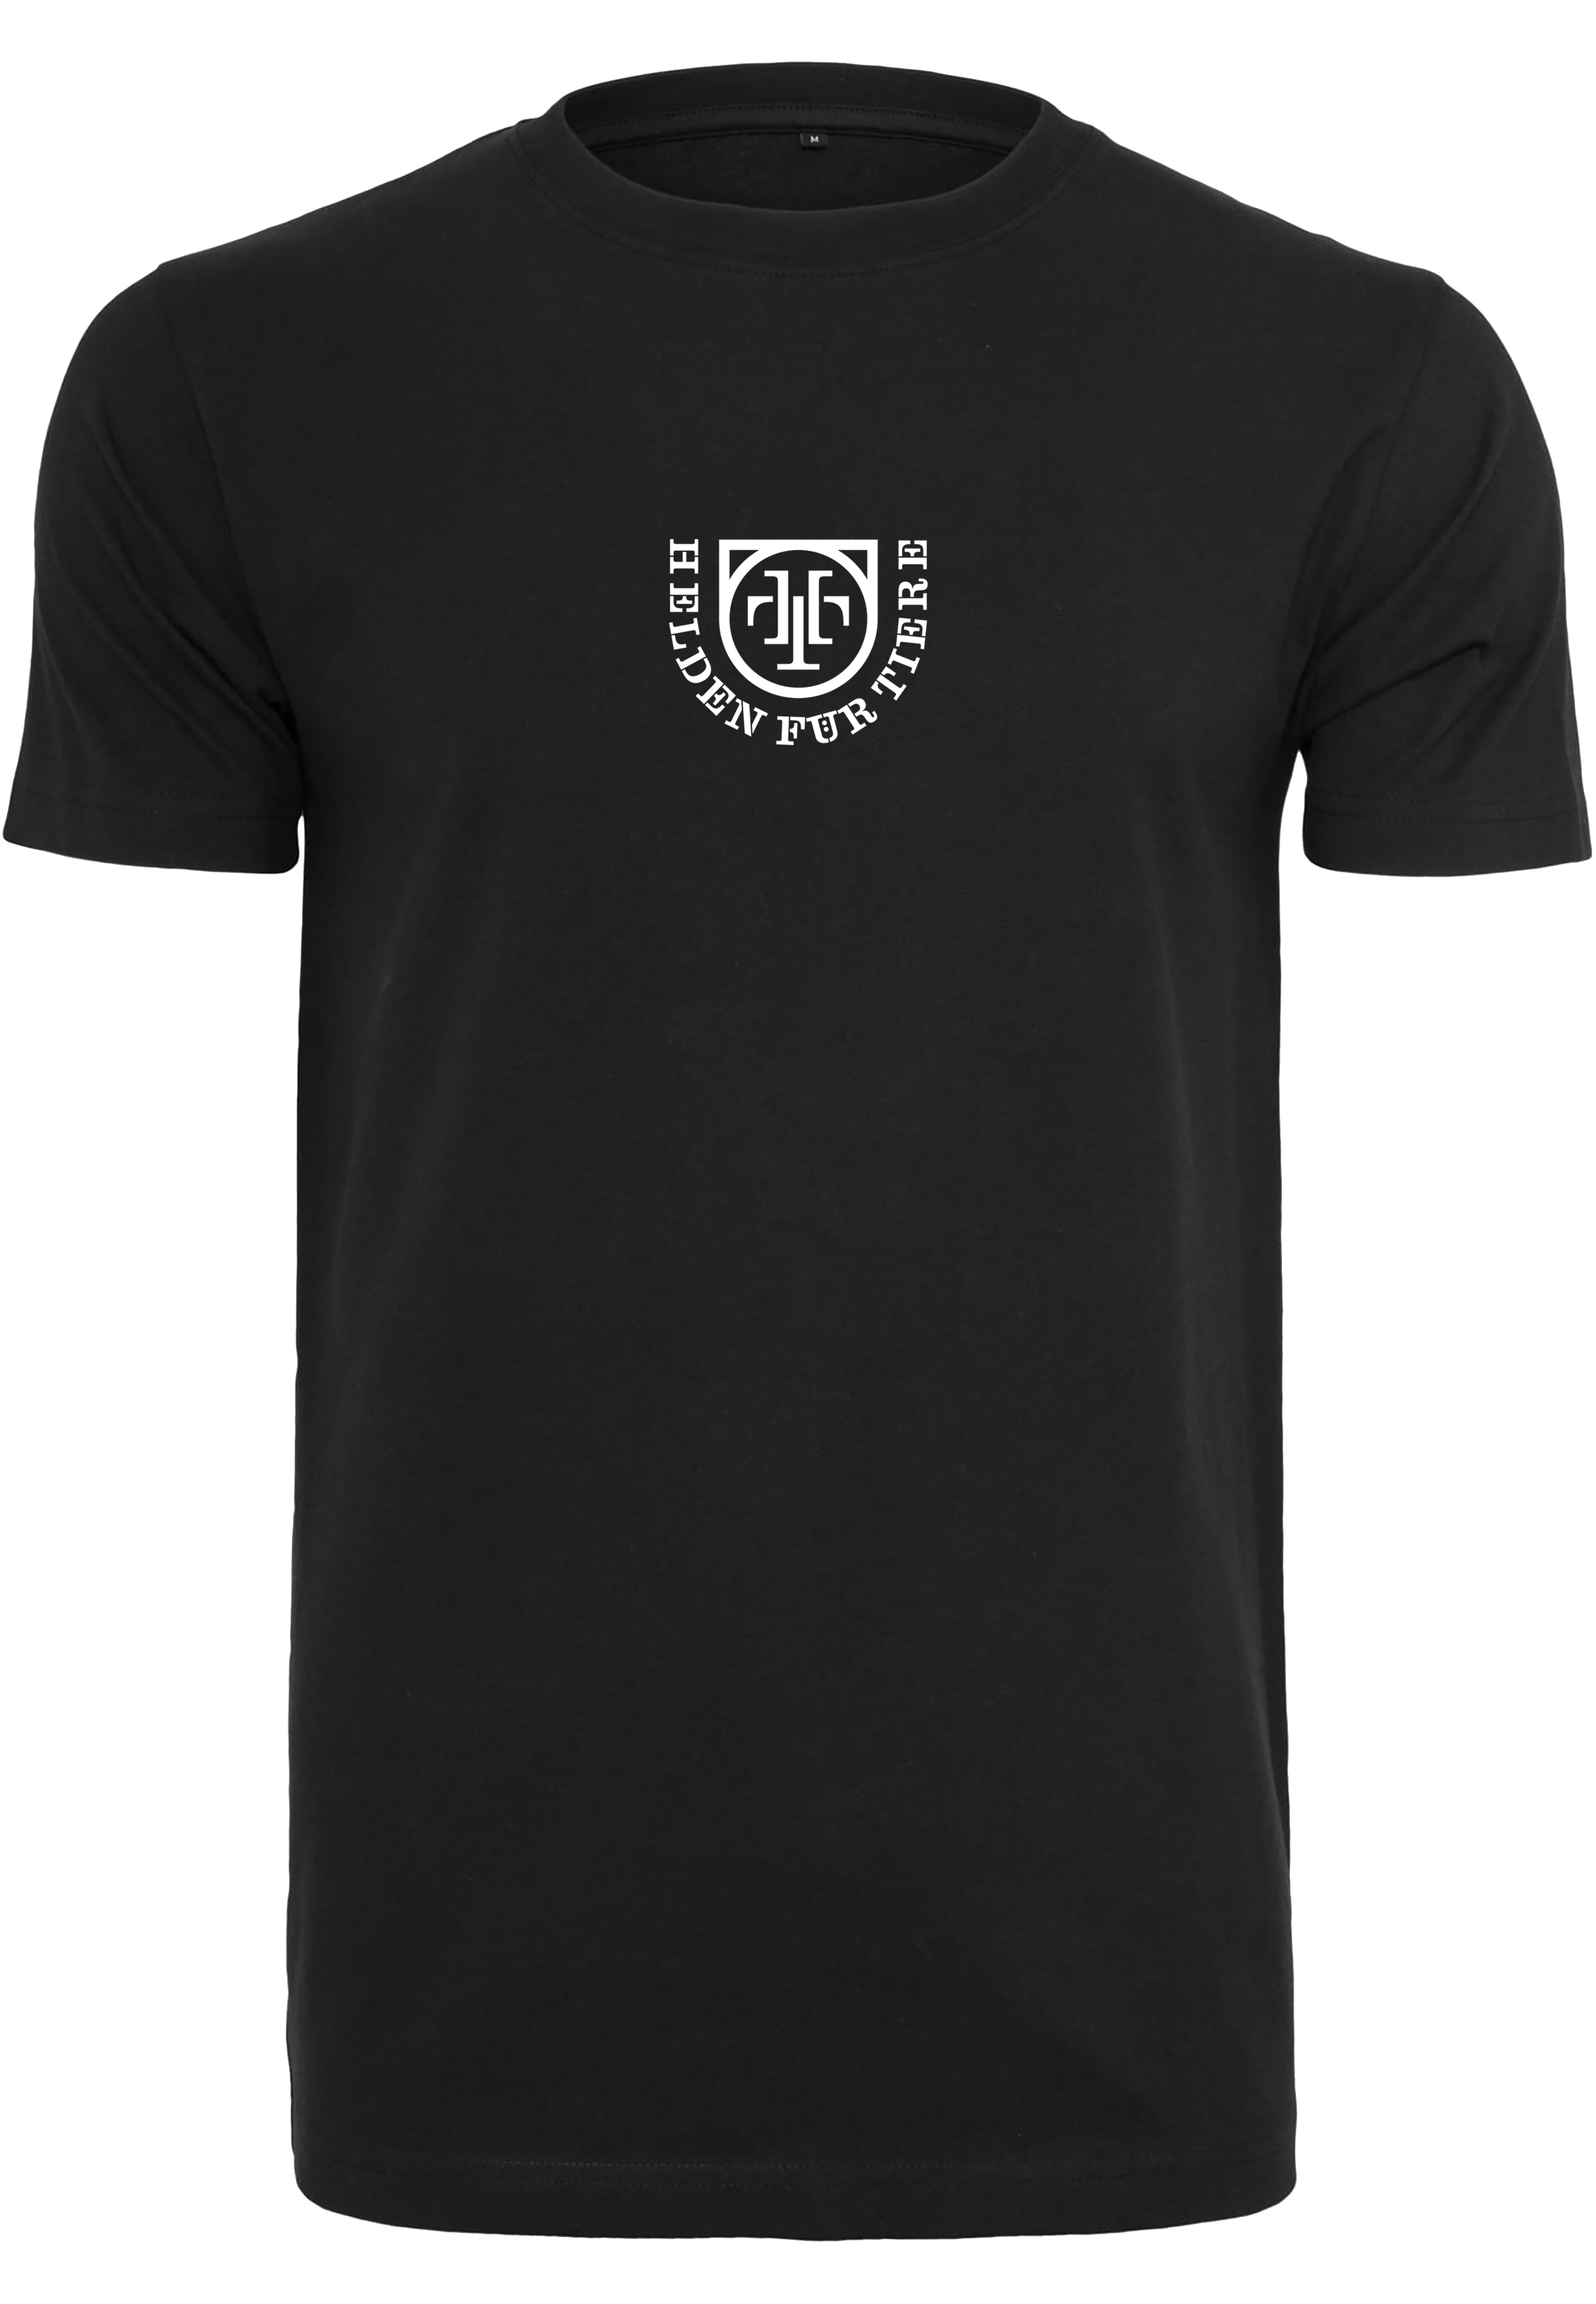 HFT small Logo Shirt (Black)